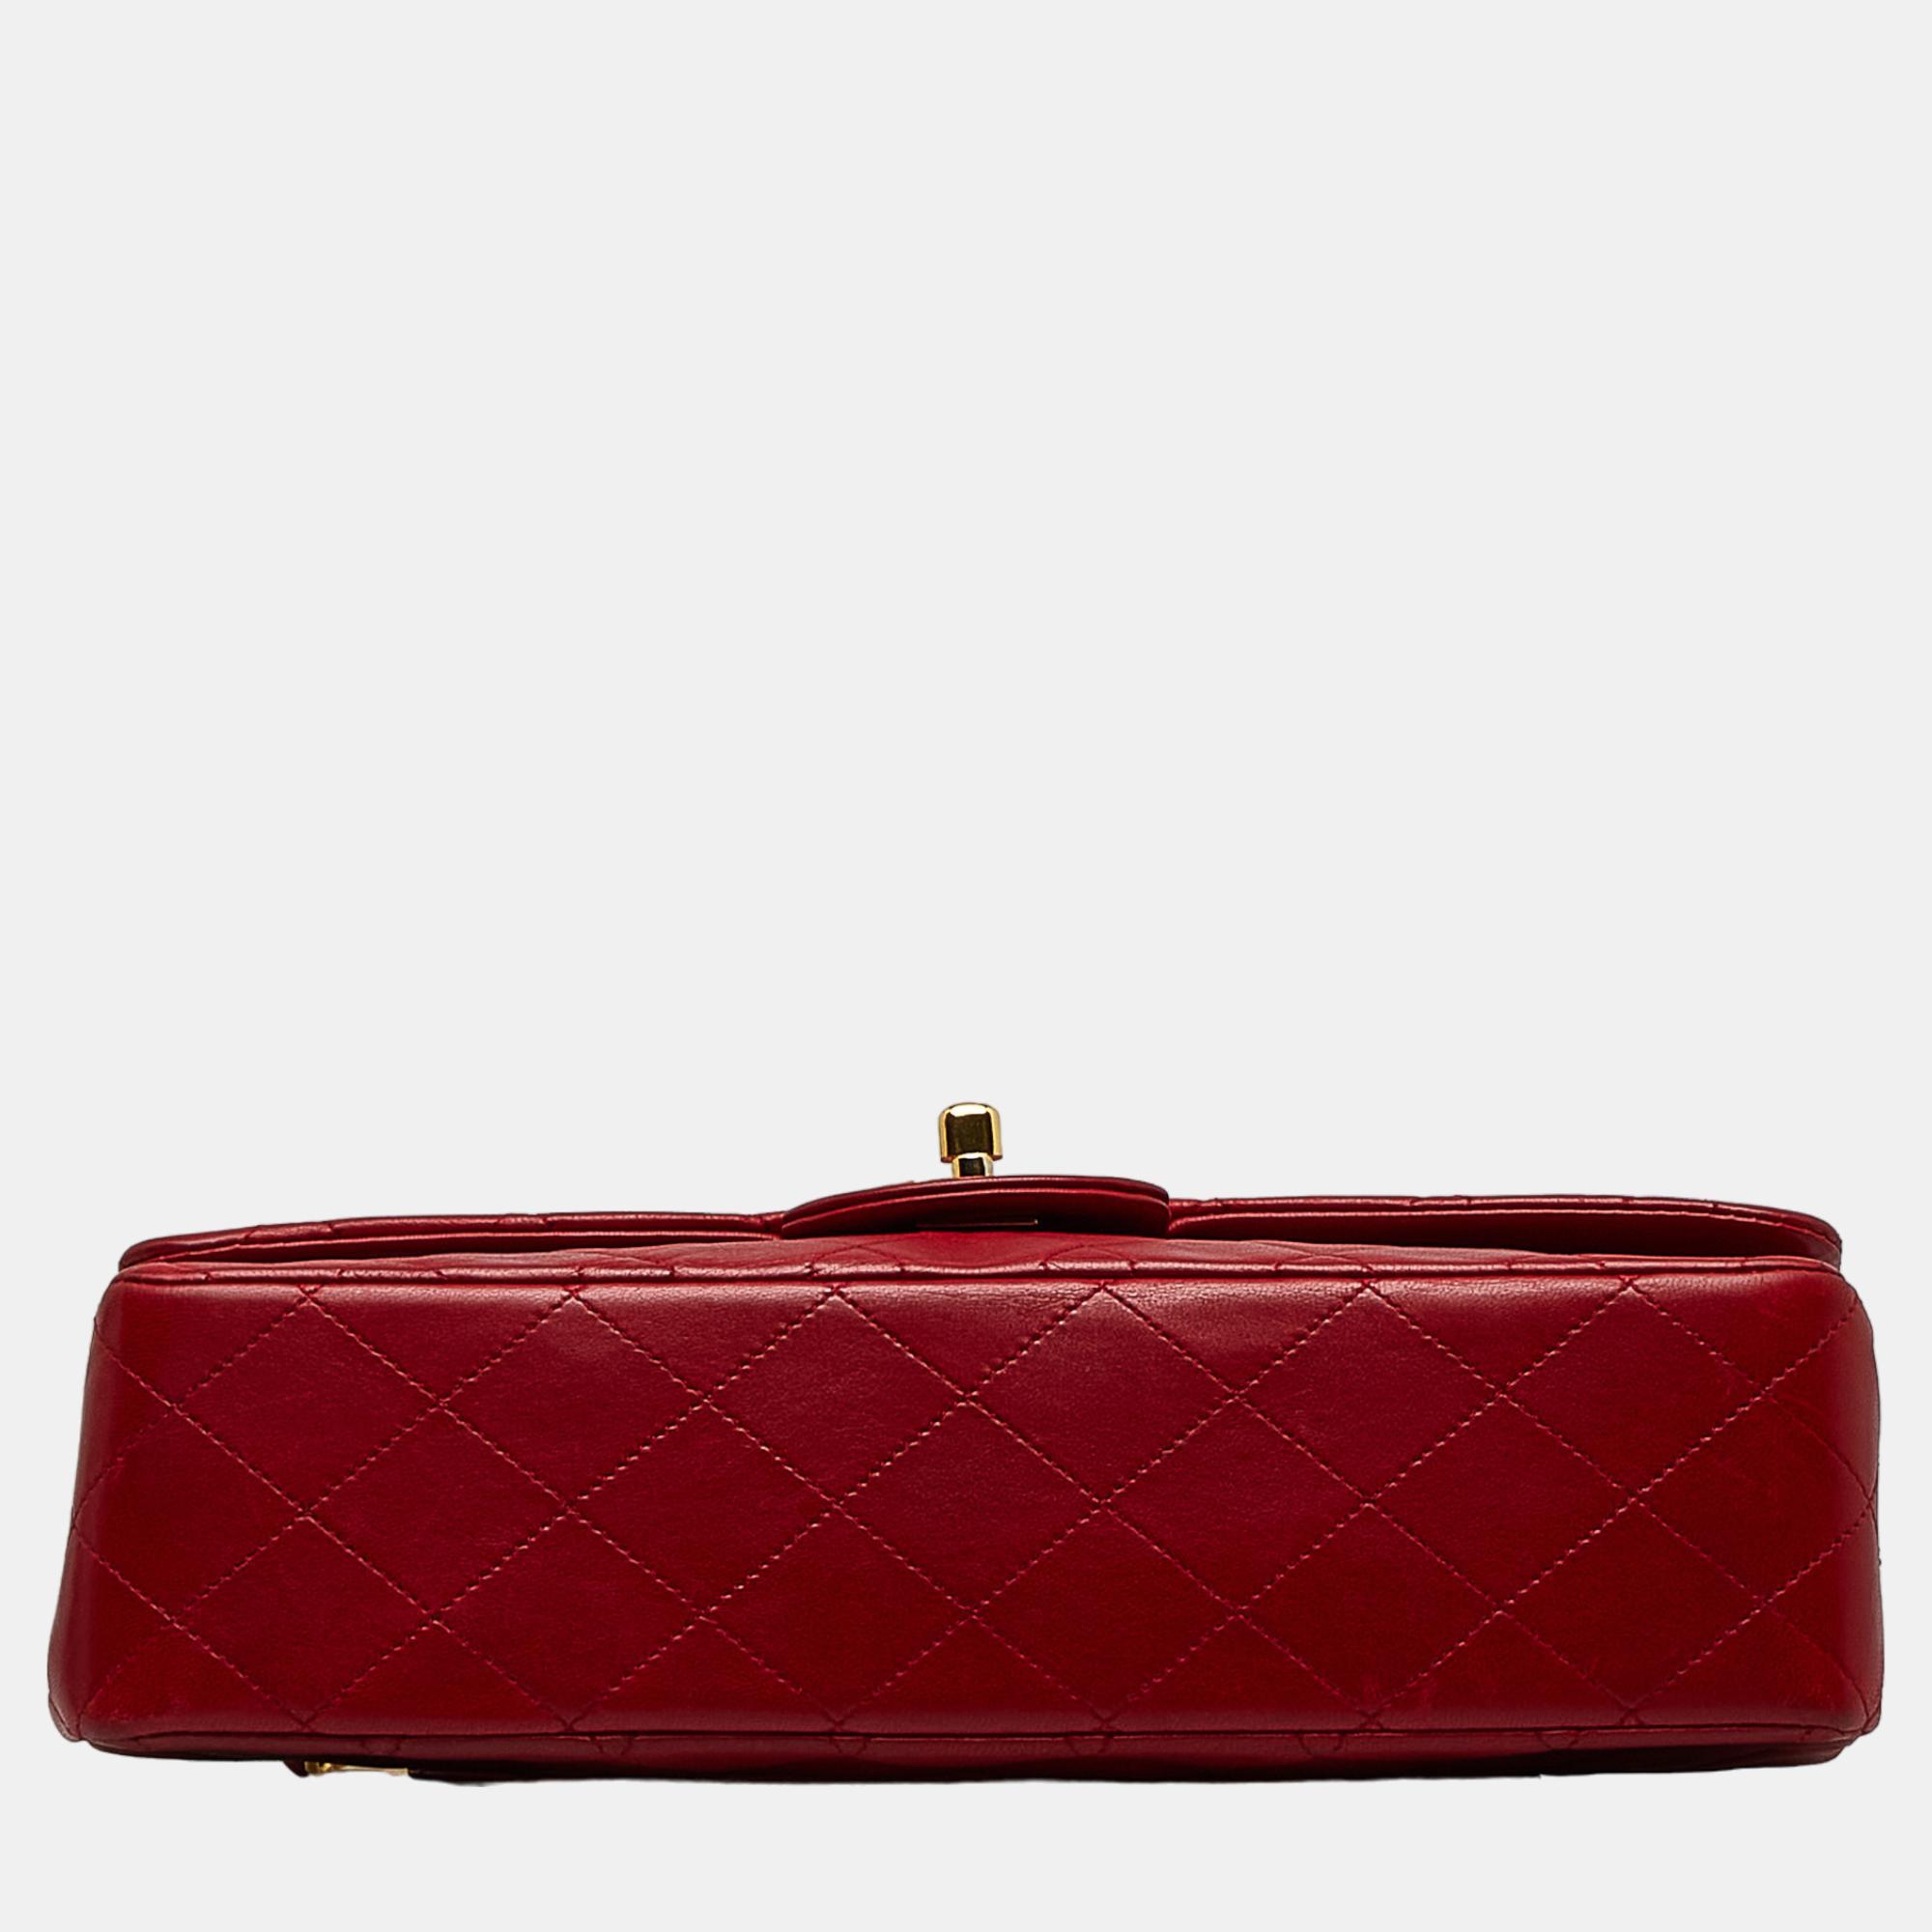 Chanel Red Medium Classic Lambskin Double Flap